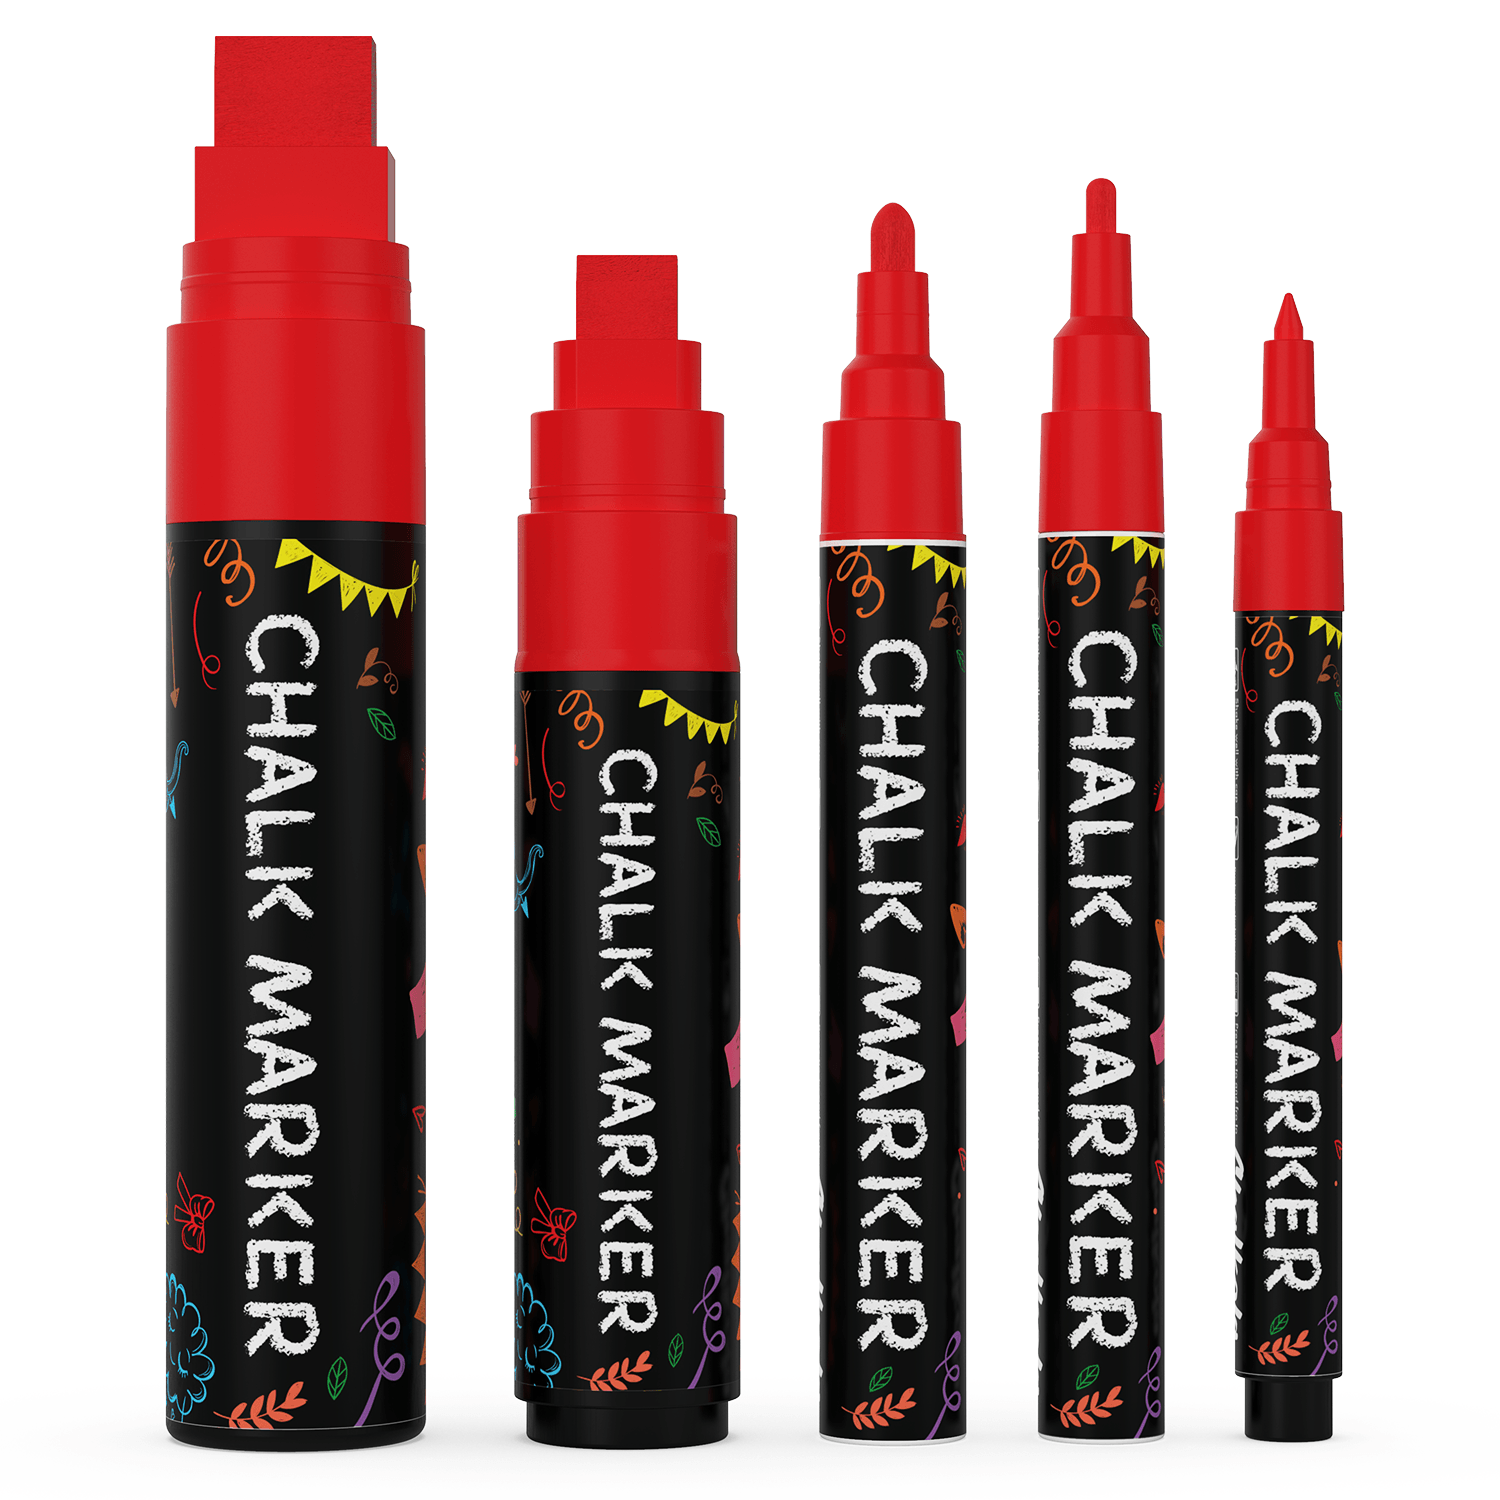 Xmmswdla Bold Chalk Markers - Dry Erase Marker Pens - Liquid Chalk Markers for Chalkboards, Signs, Windows, Blackboard, Glass, Mirrors - Chalkboard